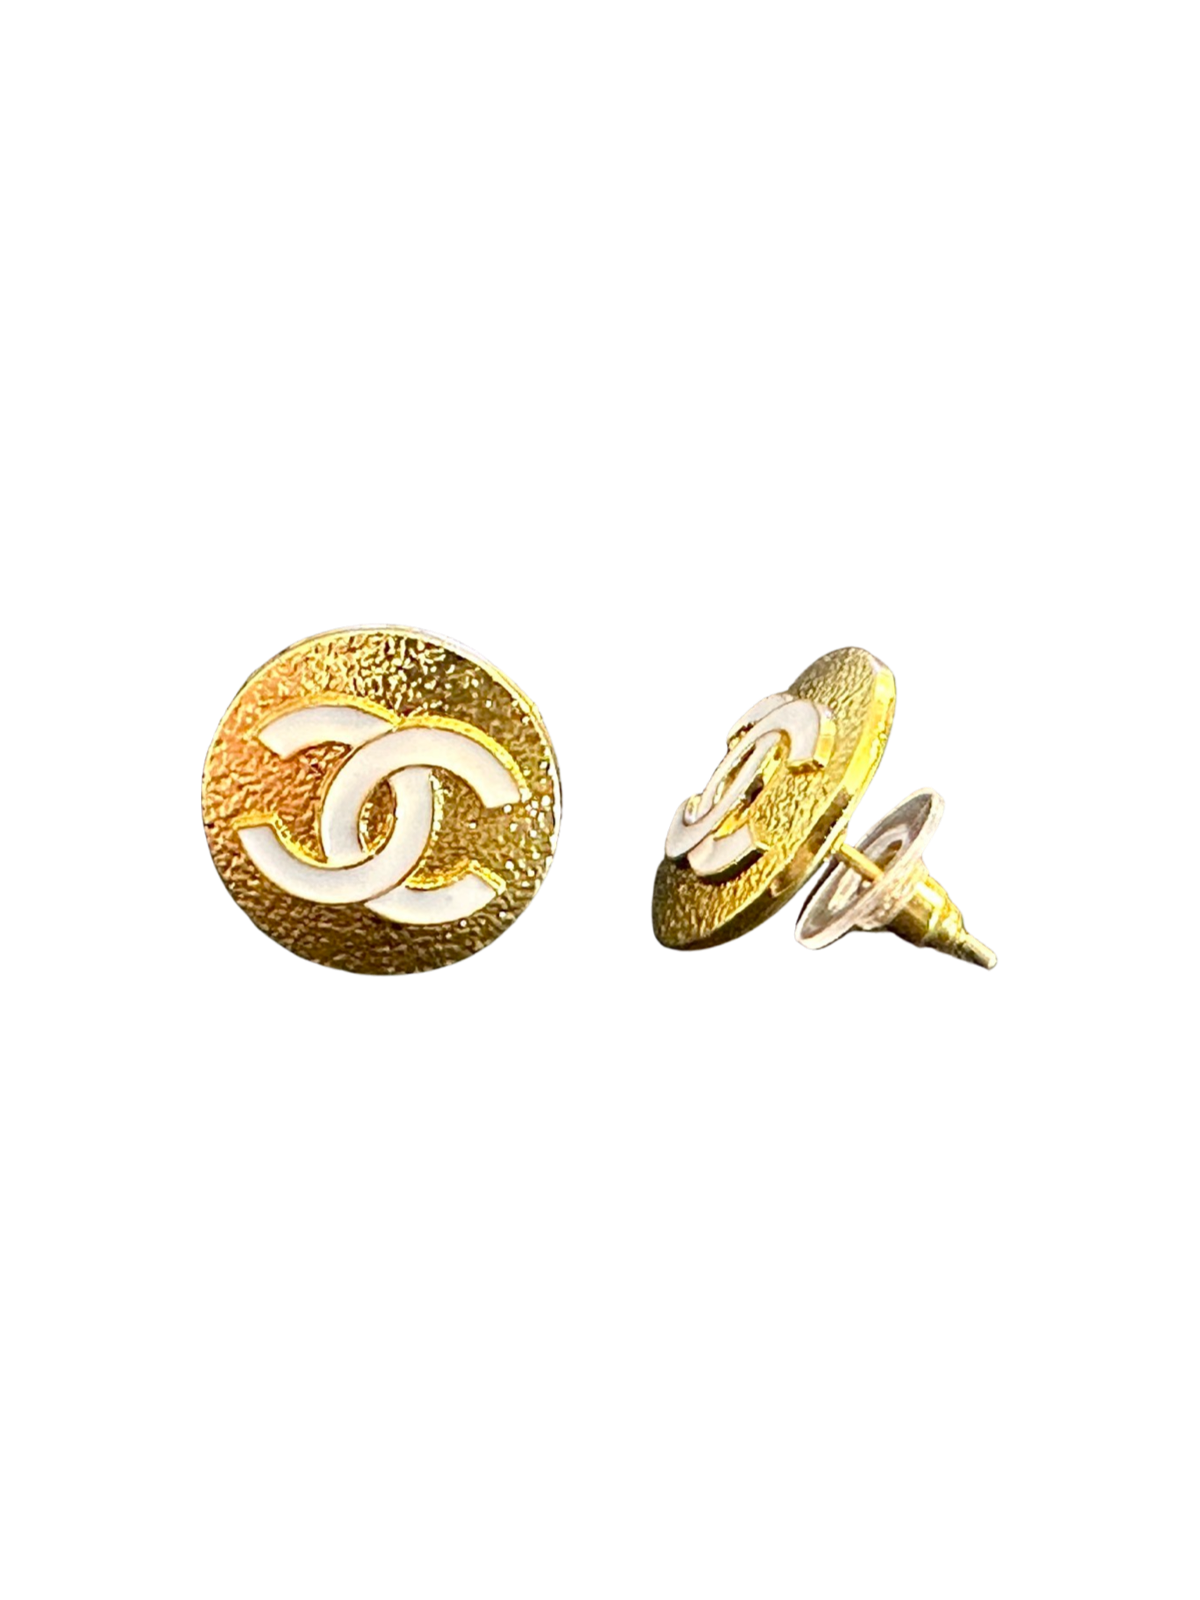 CC White & Gold Button Earrings